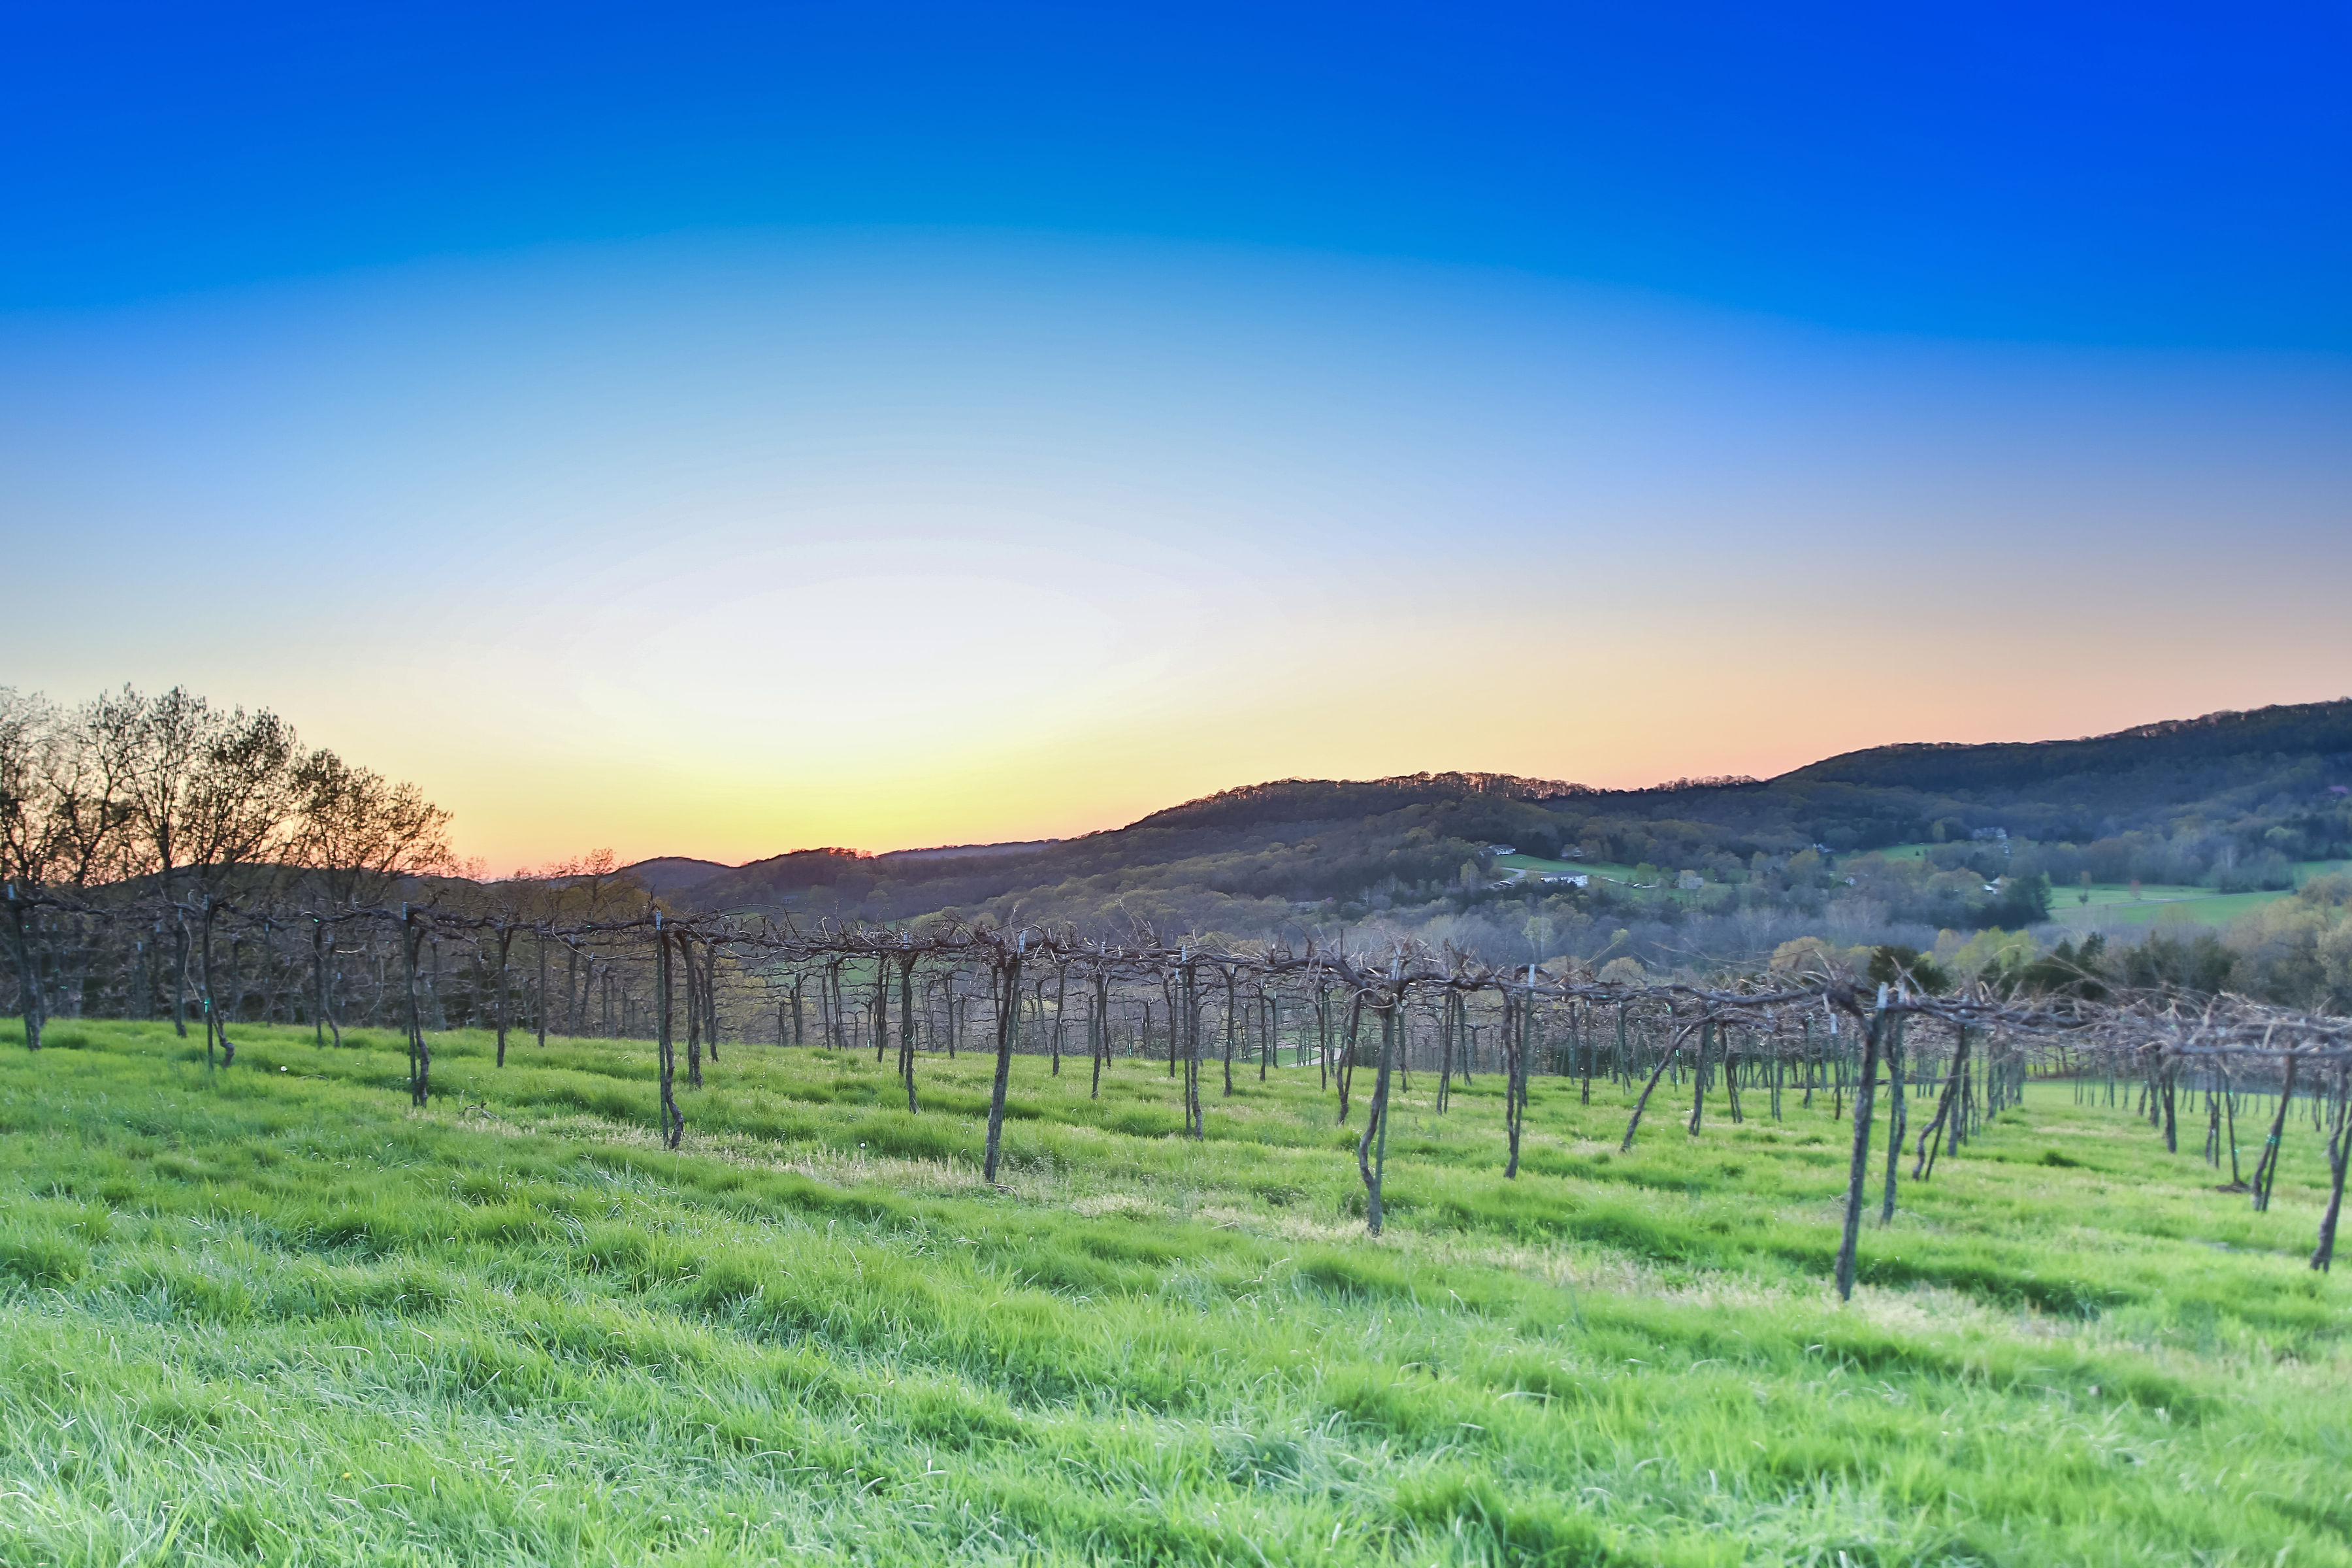 Adam Puchta Winery- Several rows of unripe grape vines